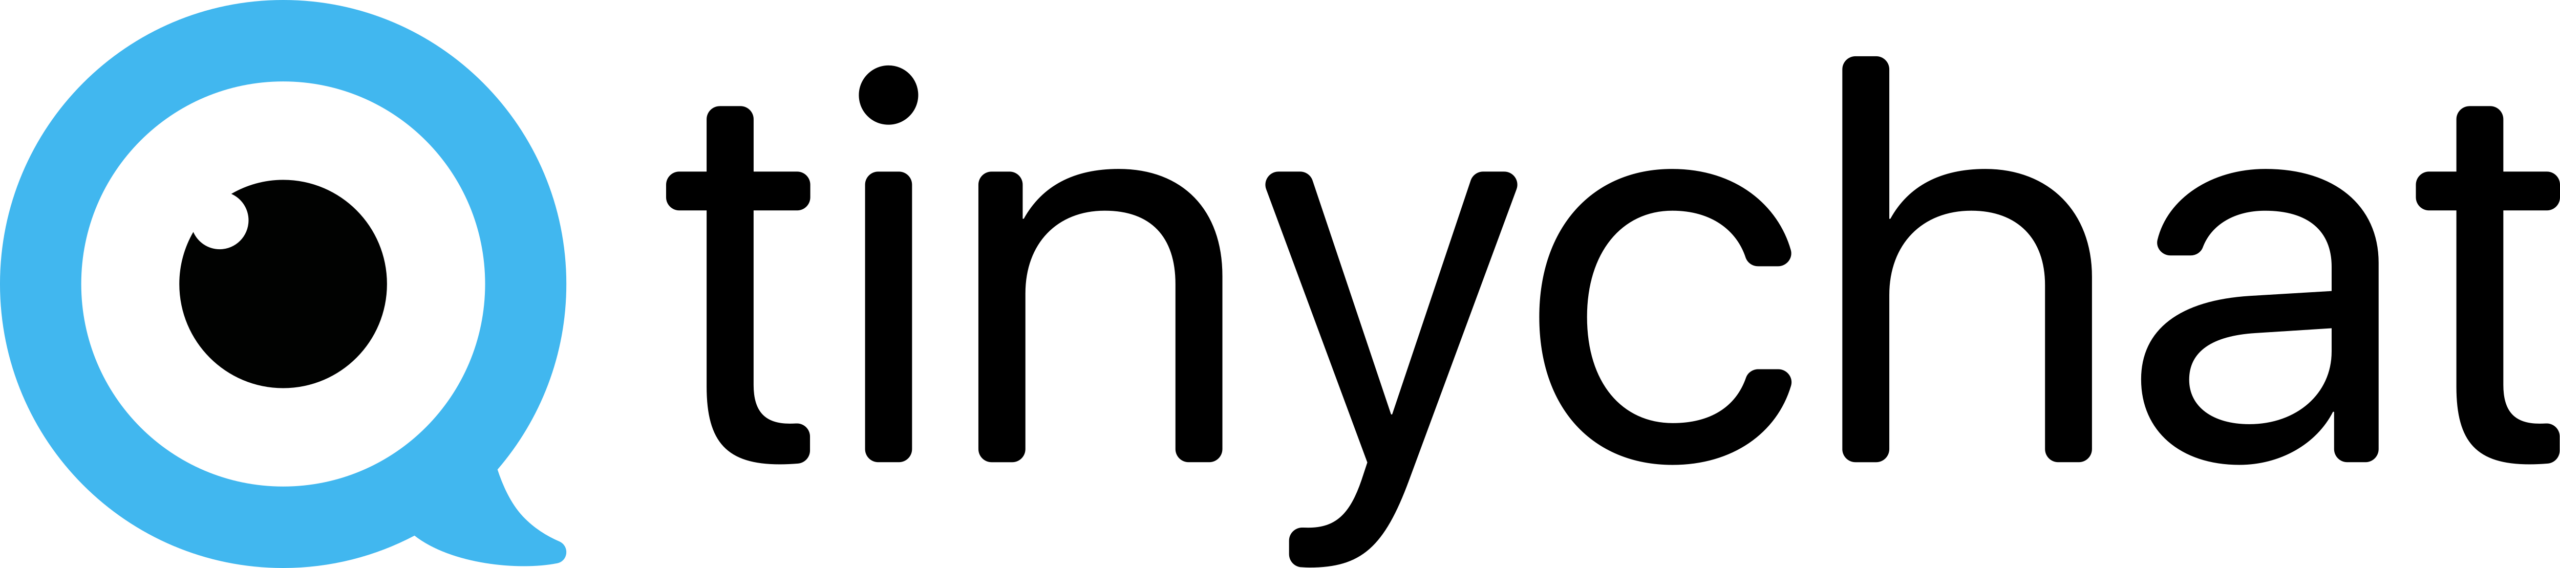 Logotipo do Tinychat